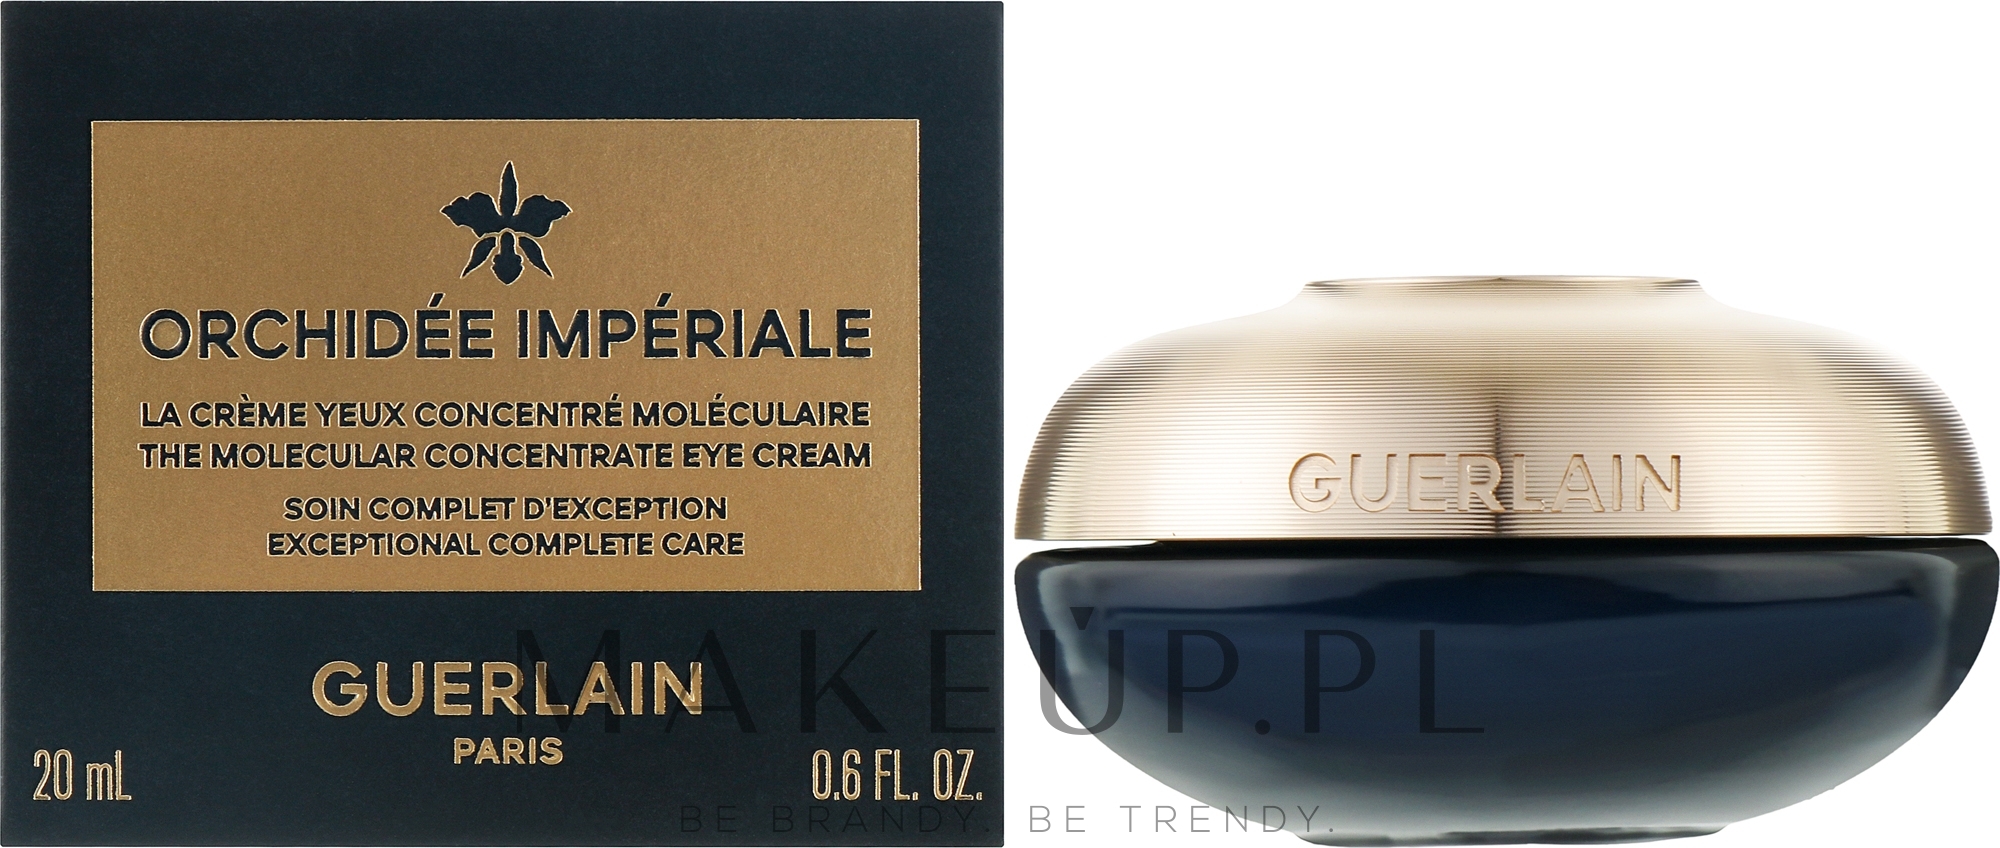 Krem do okolic oczu - Guerlain Orchidee Imperiale Molecular Concentrated Eye Cream  — Zdjęcie 20 ml